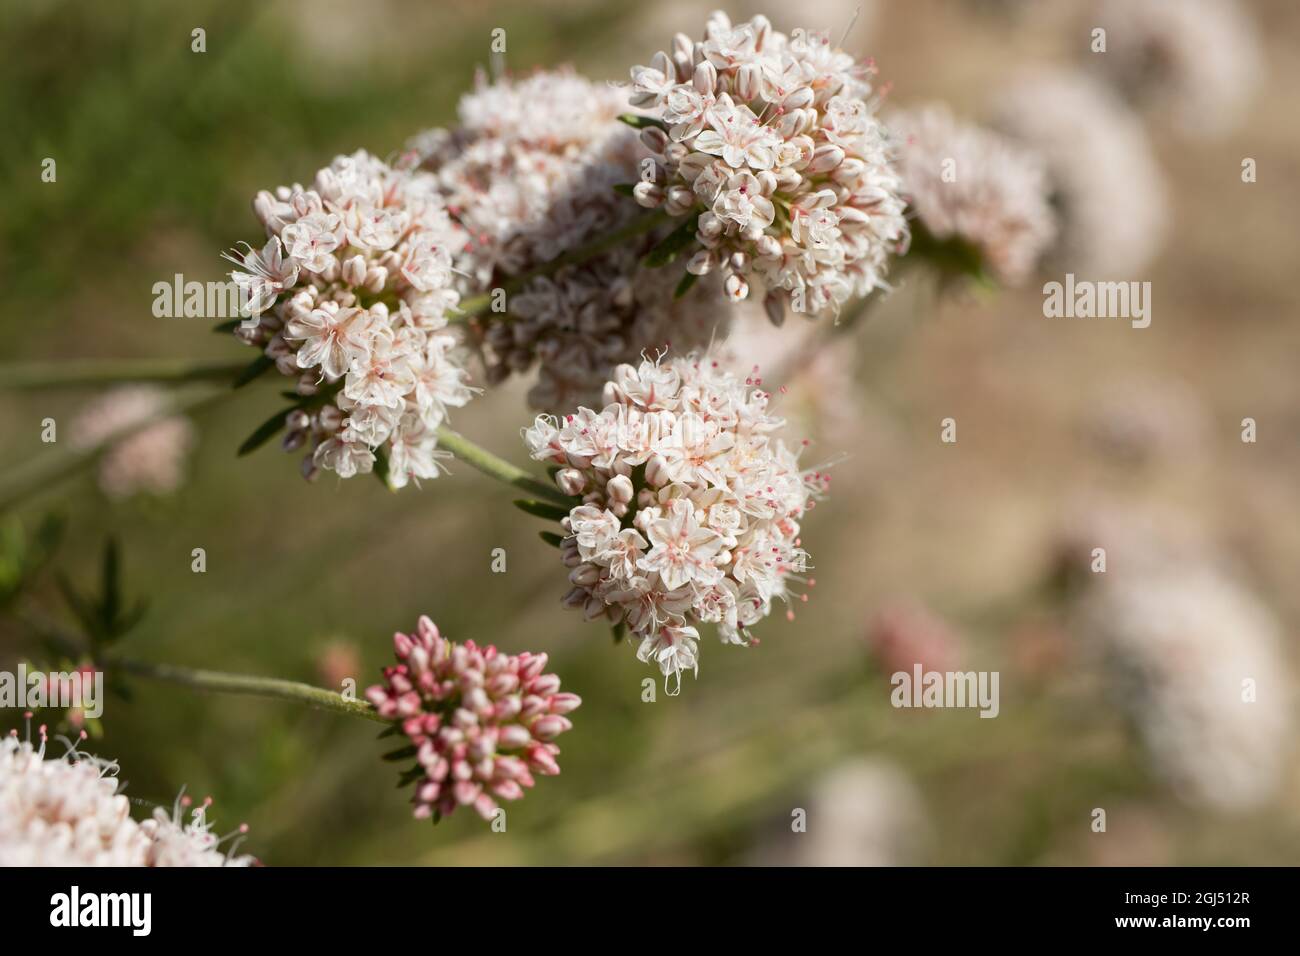 White cymose head inflorescences of California Buckwheat, Eriogonum Fasciculatum, Polygonaceae, native in the Santa Monica Mountains, Springtime. Stock Photo